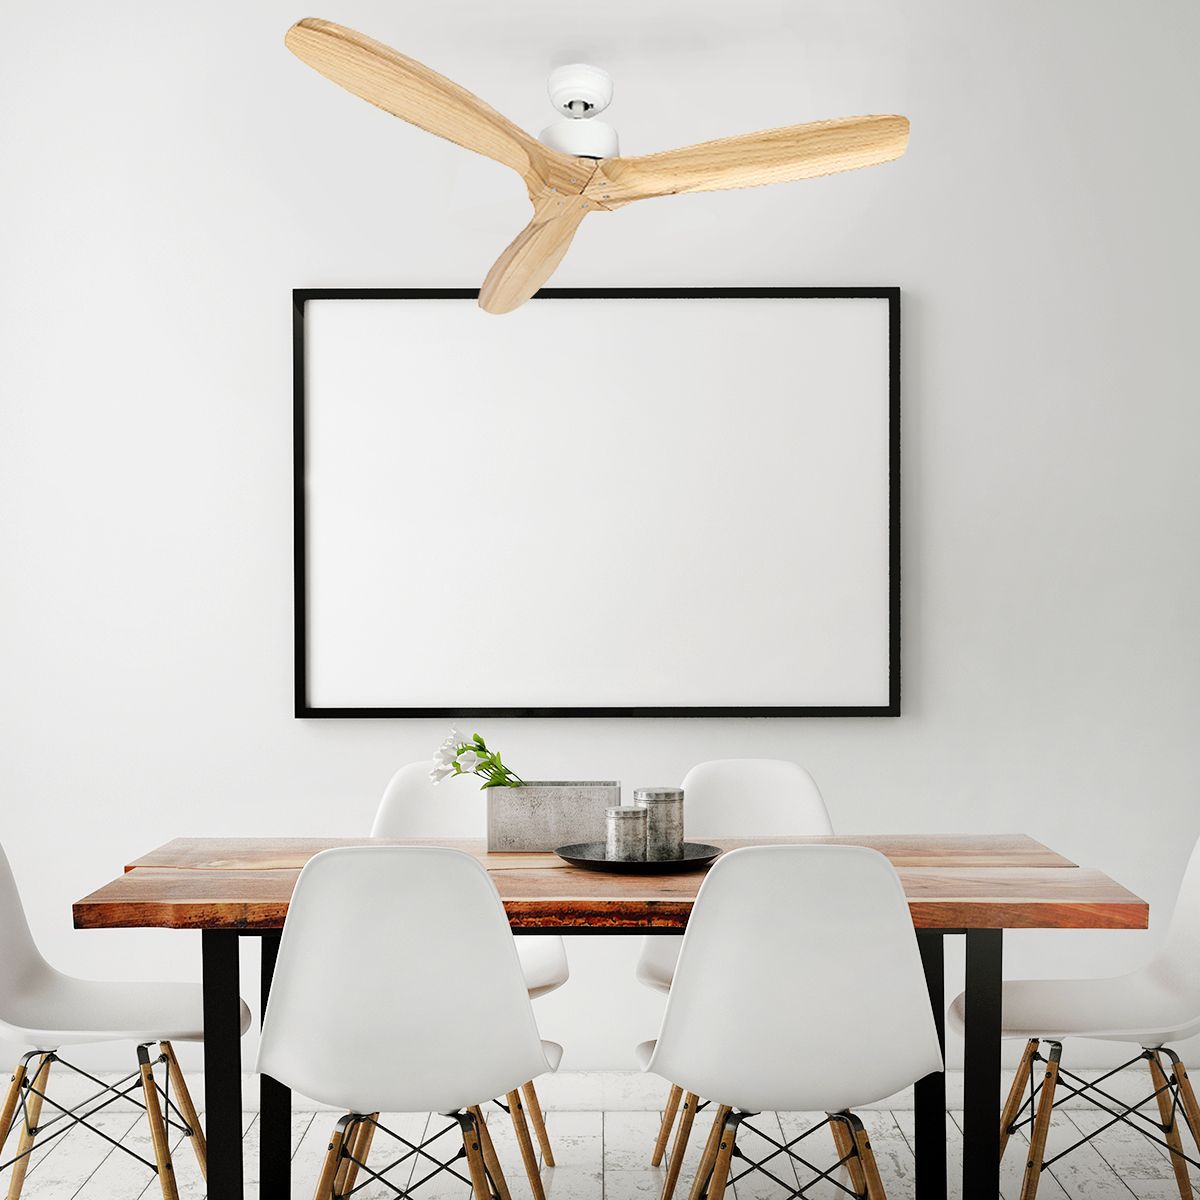 110V-52-inch-Wooden-Ceiling-Fan-Modern-Remote-Control-Home-Living-Room-Ventilators-Decor-1547865